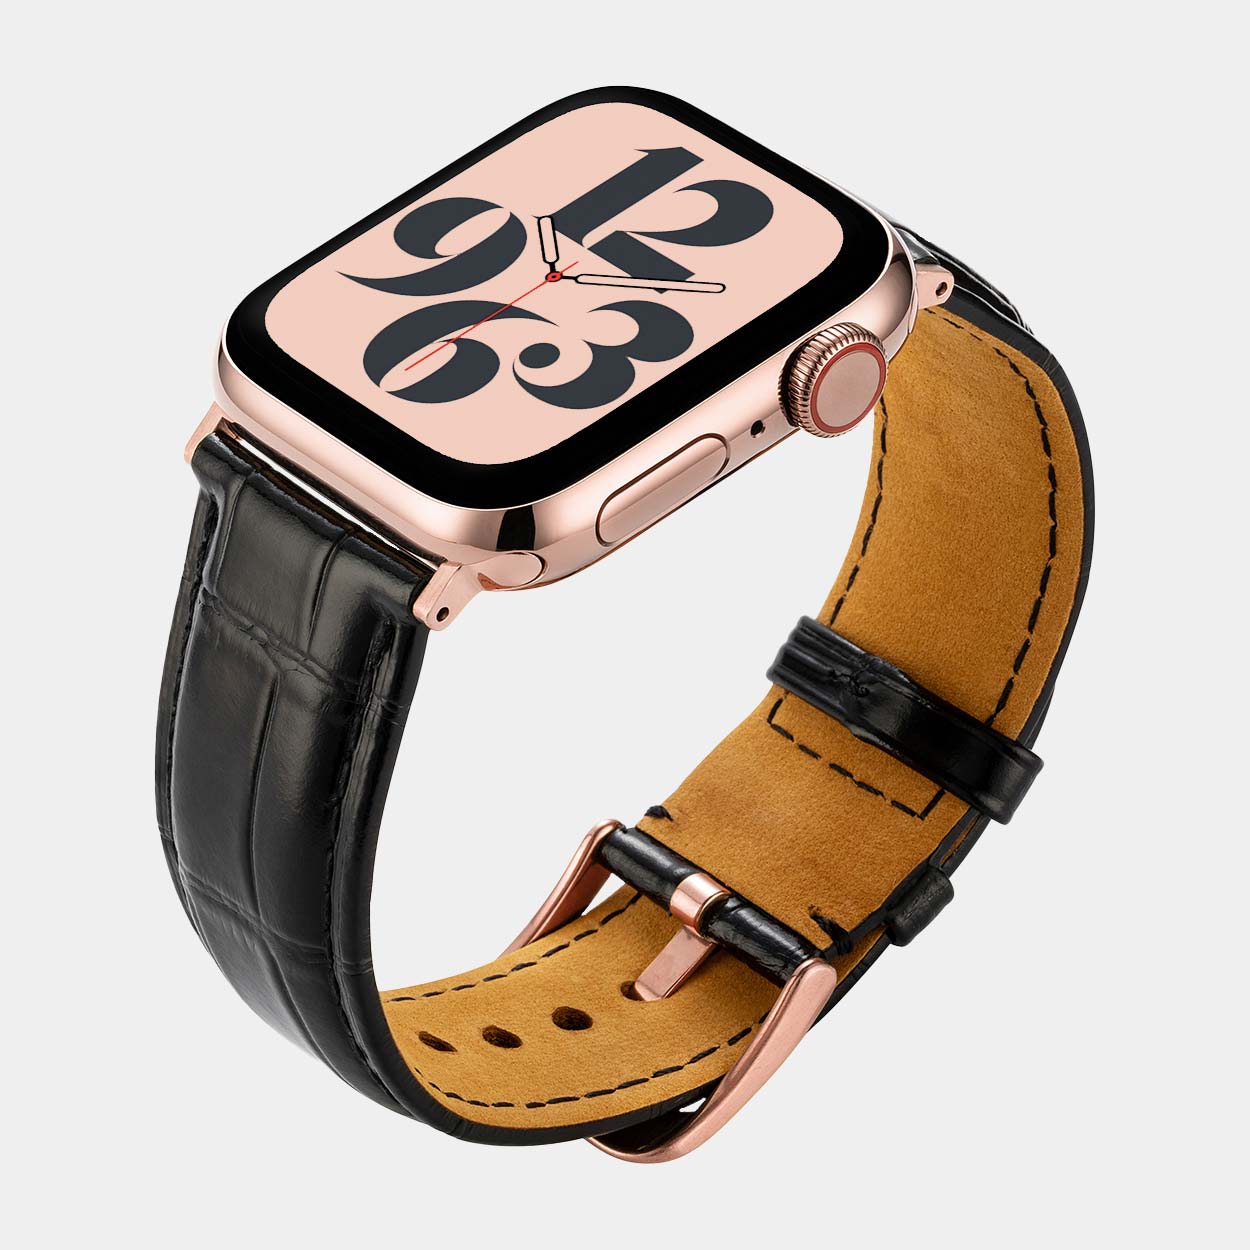 Miam Apple Watch Strap - Black - Buckle & Band - MIA-38-BLK-RG